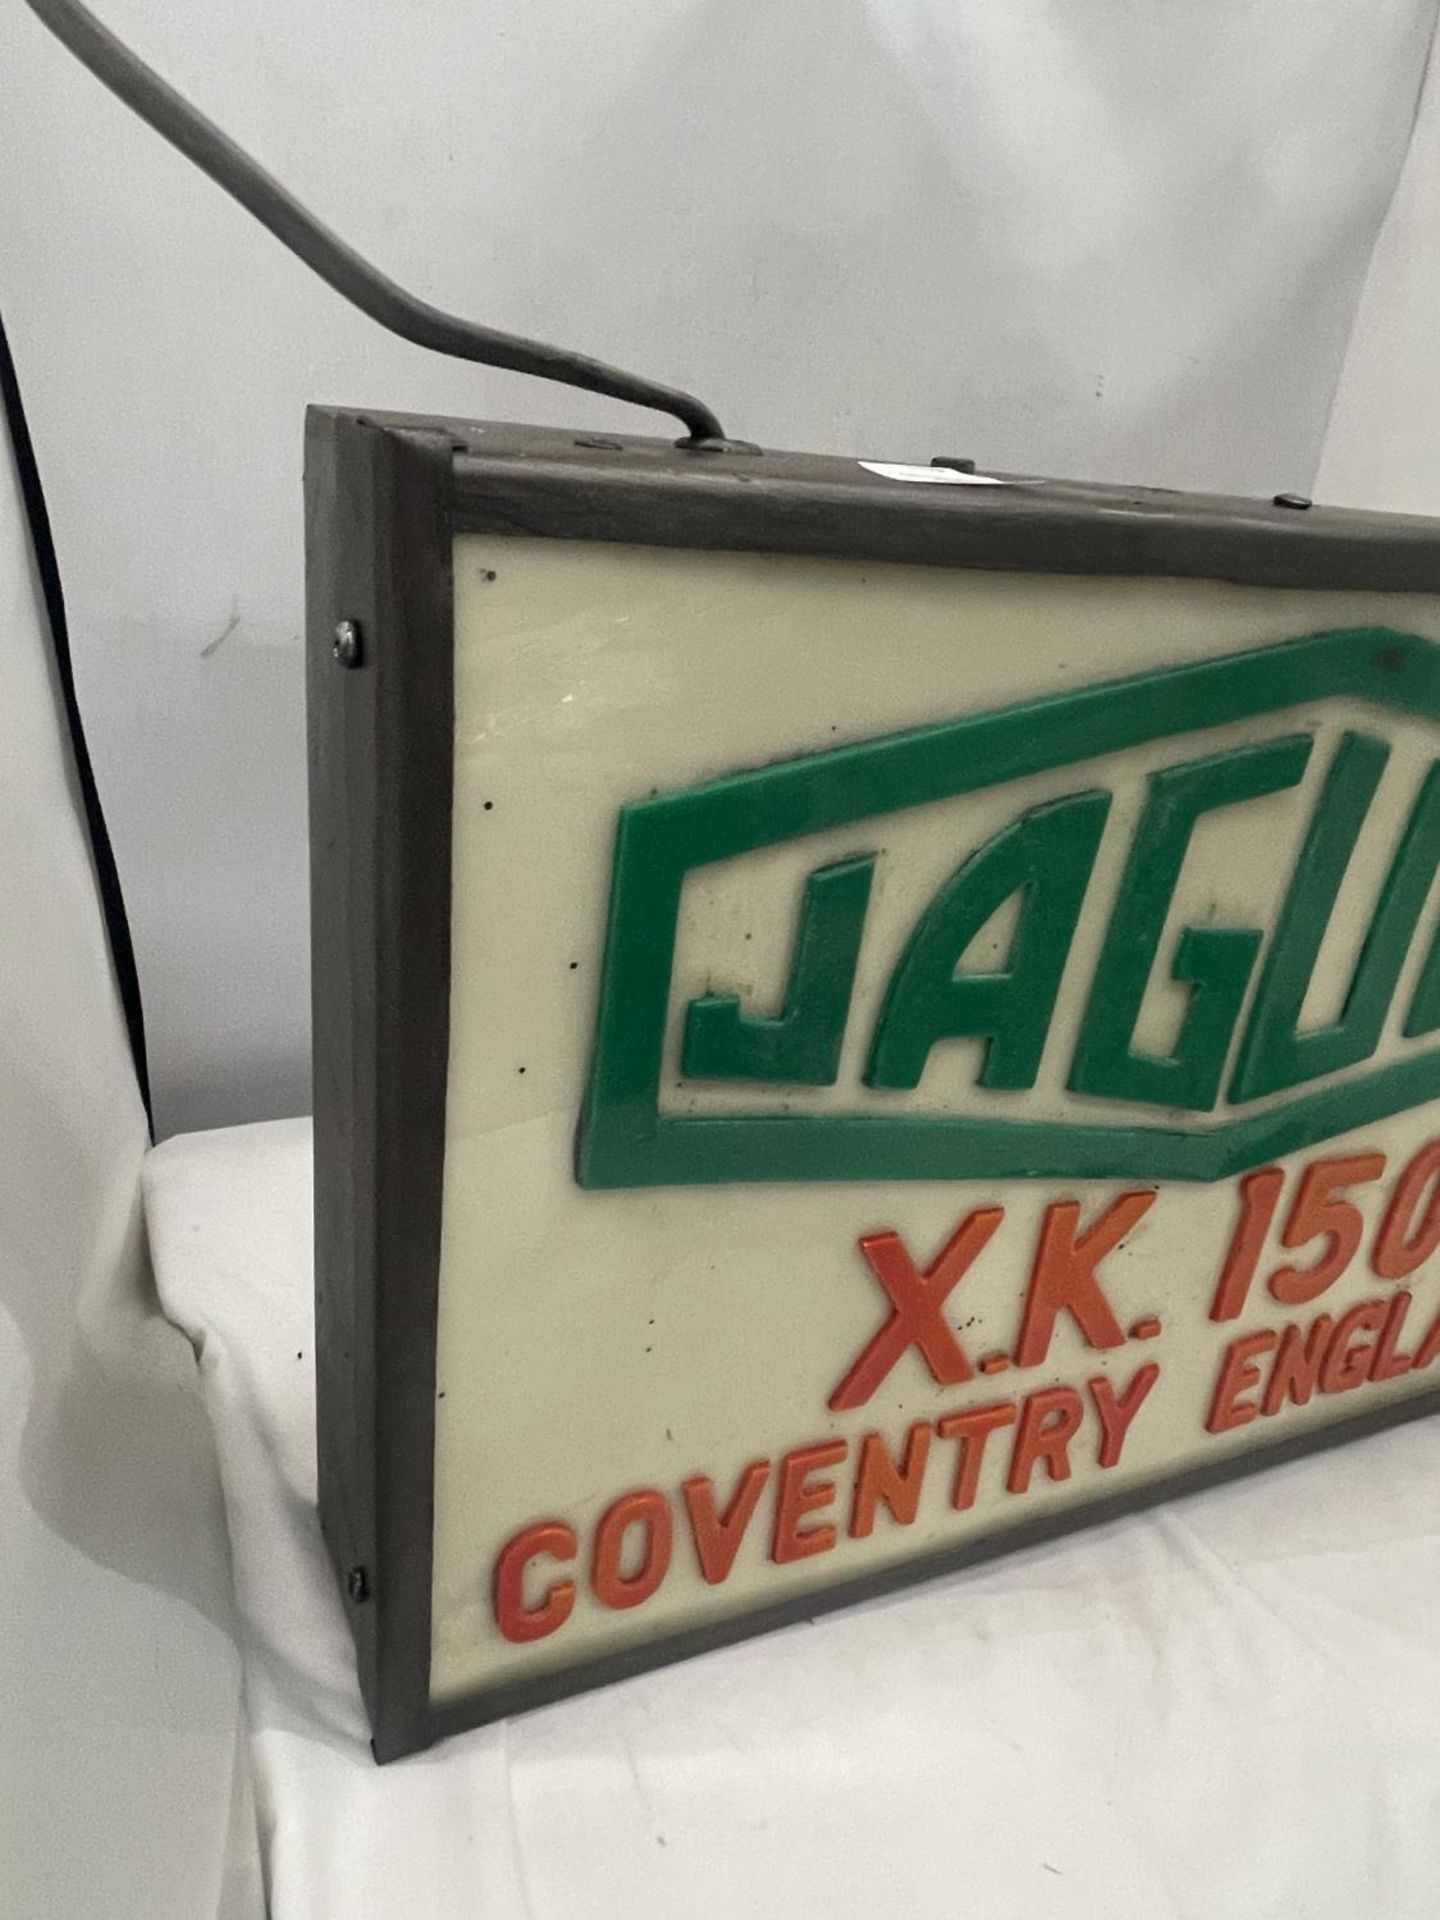 A JAGUAR X K 150 COVENTRY ENGLAND ILLUMINATED LIGHT BOX SIGN 53CM X 34CM - Image 3 of 4